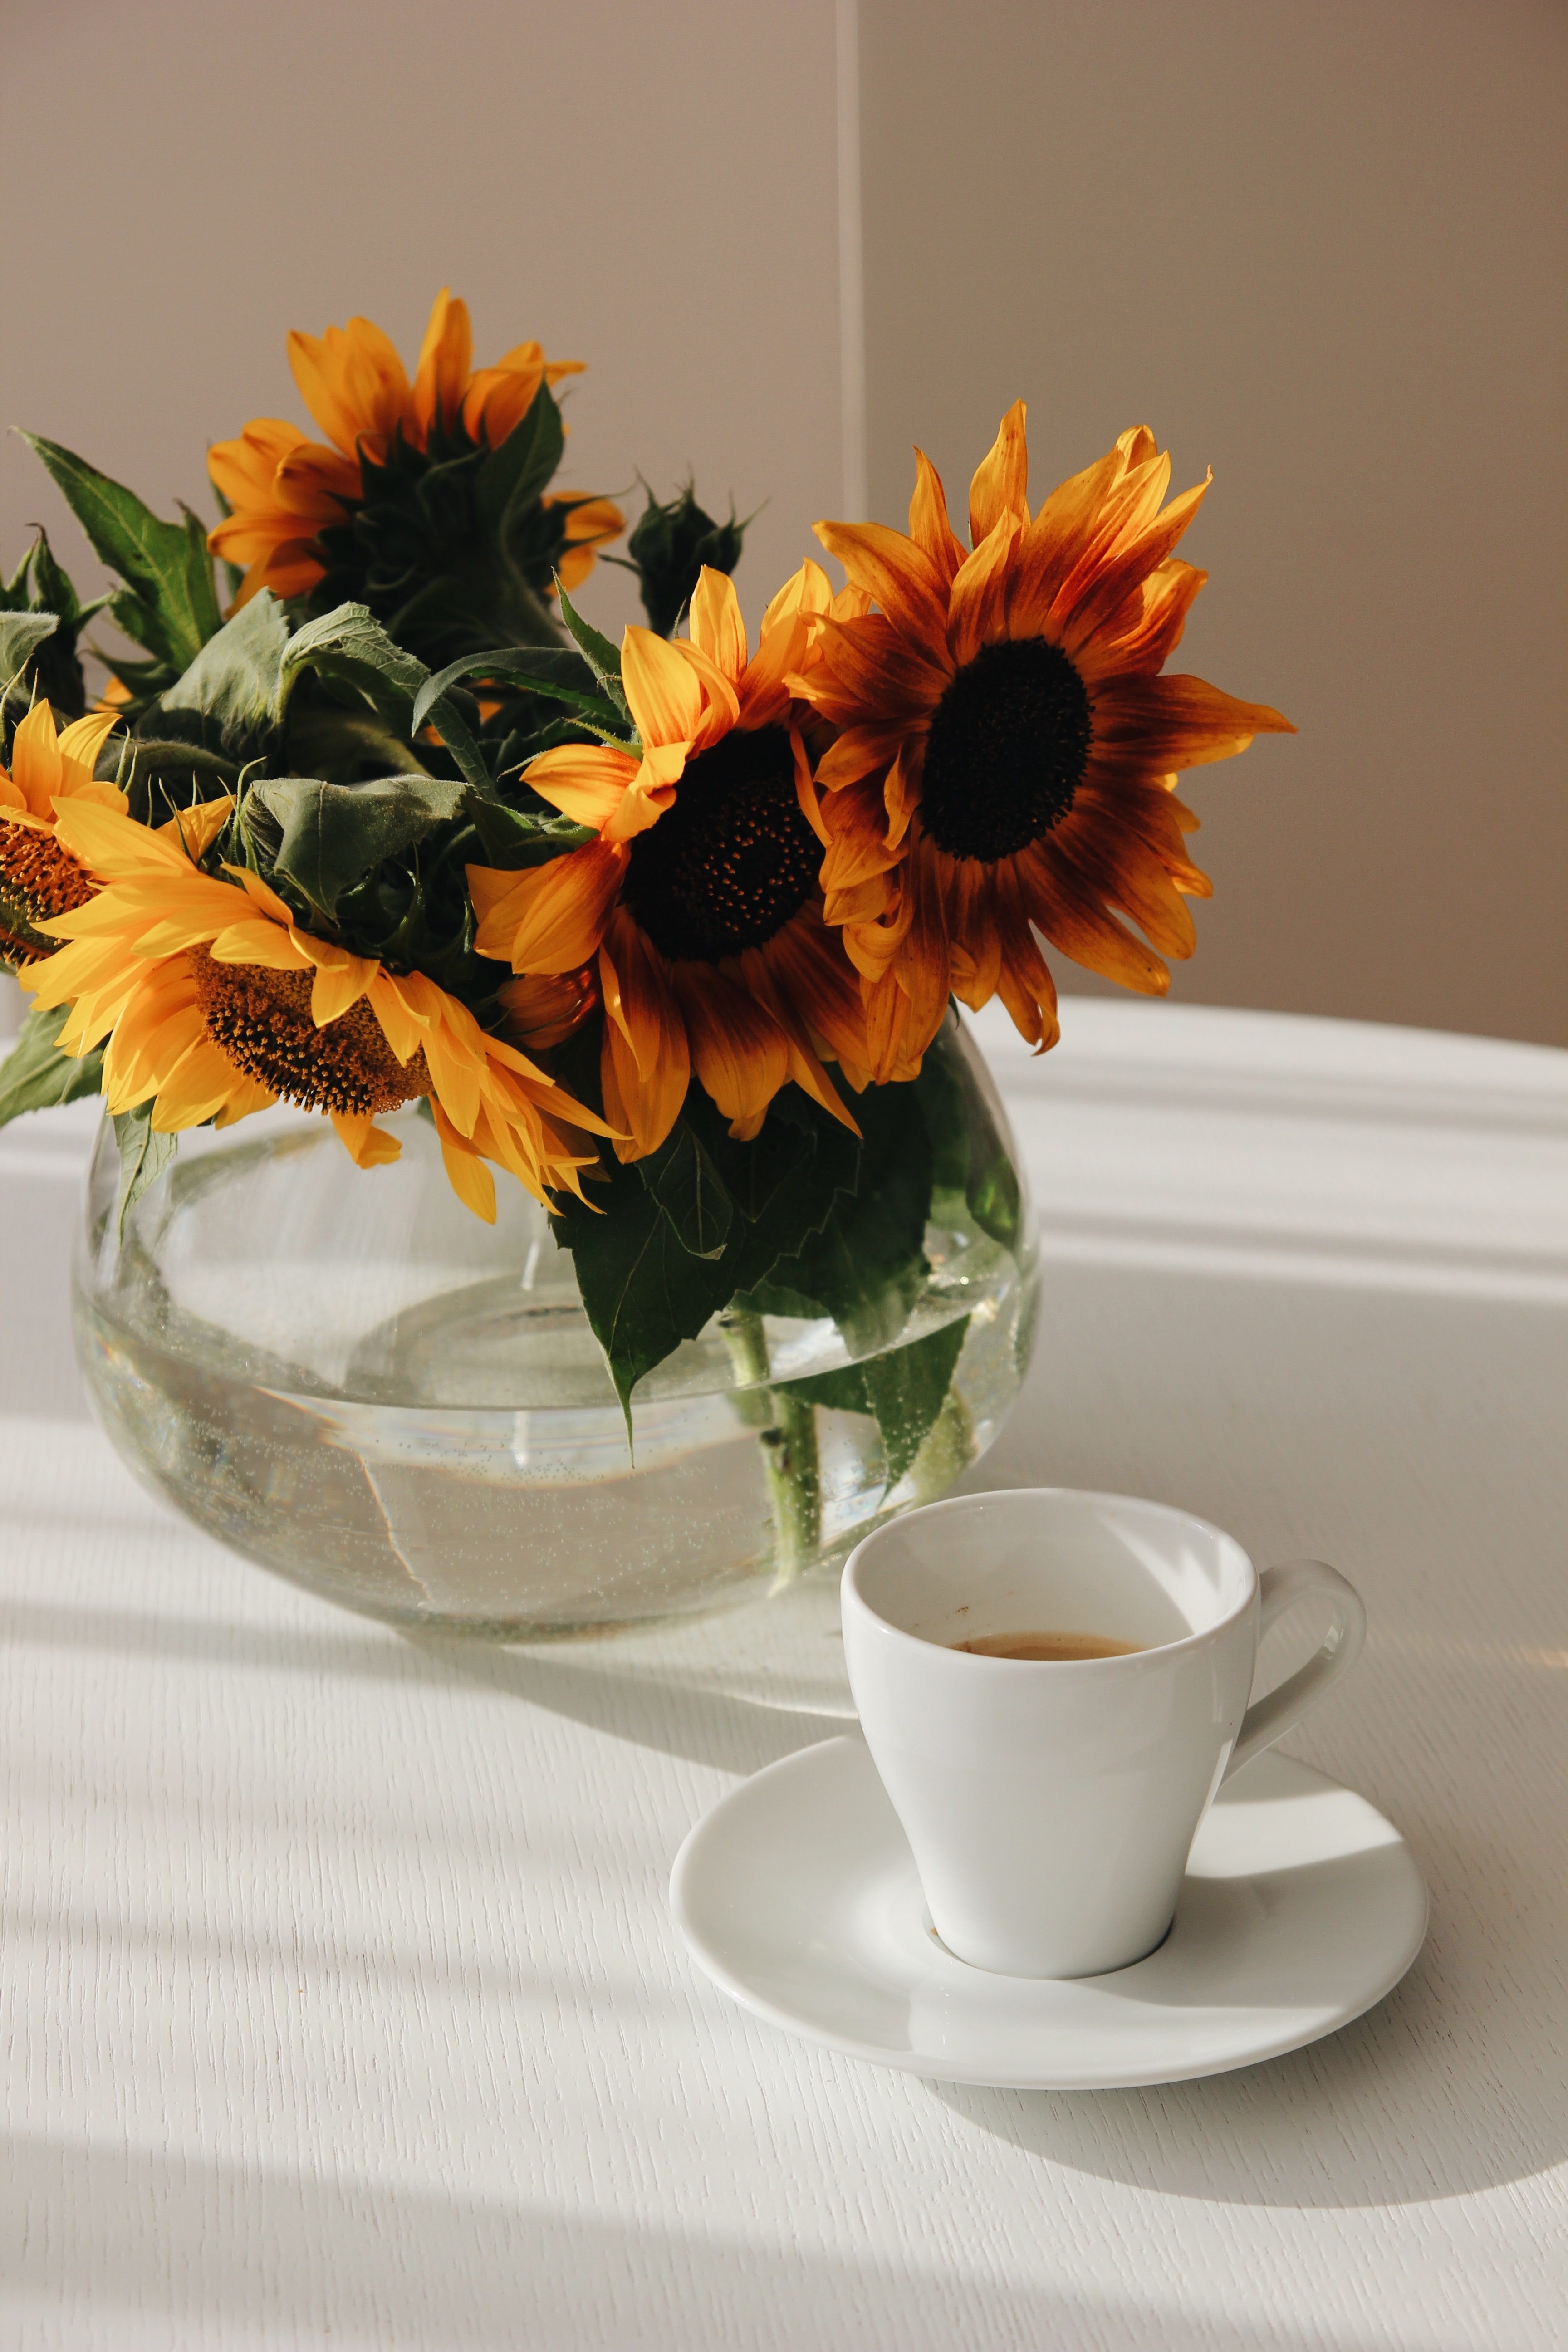 cup, flowers, sunflowers, bouquet, table, vase